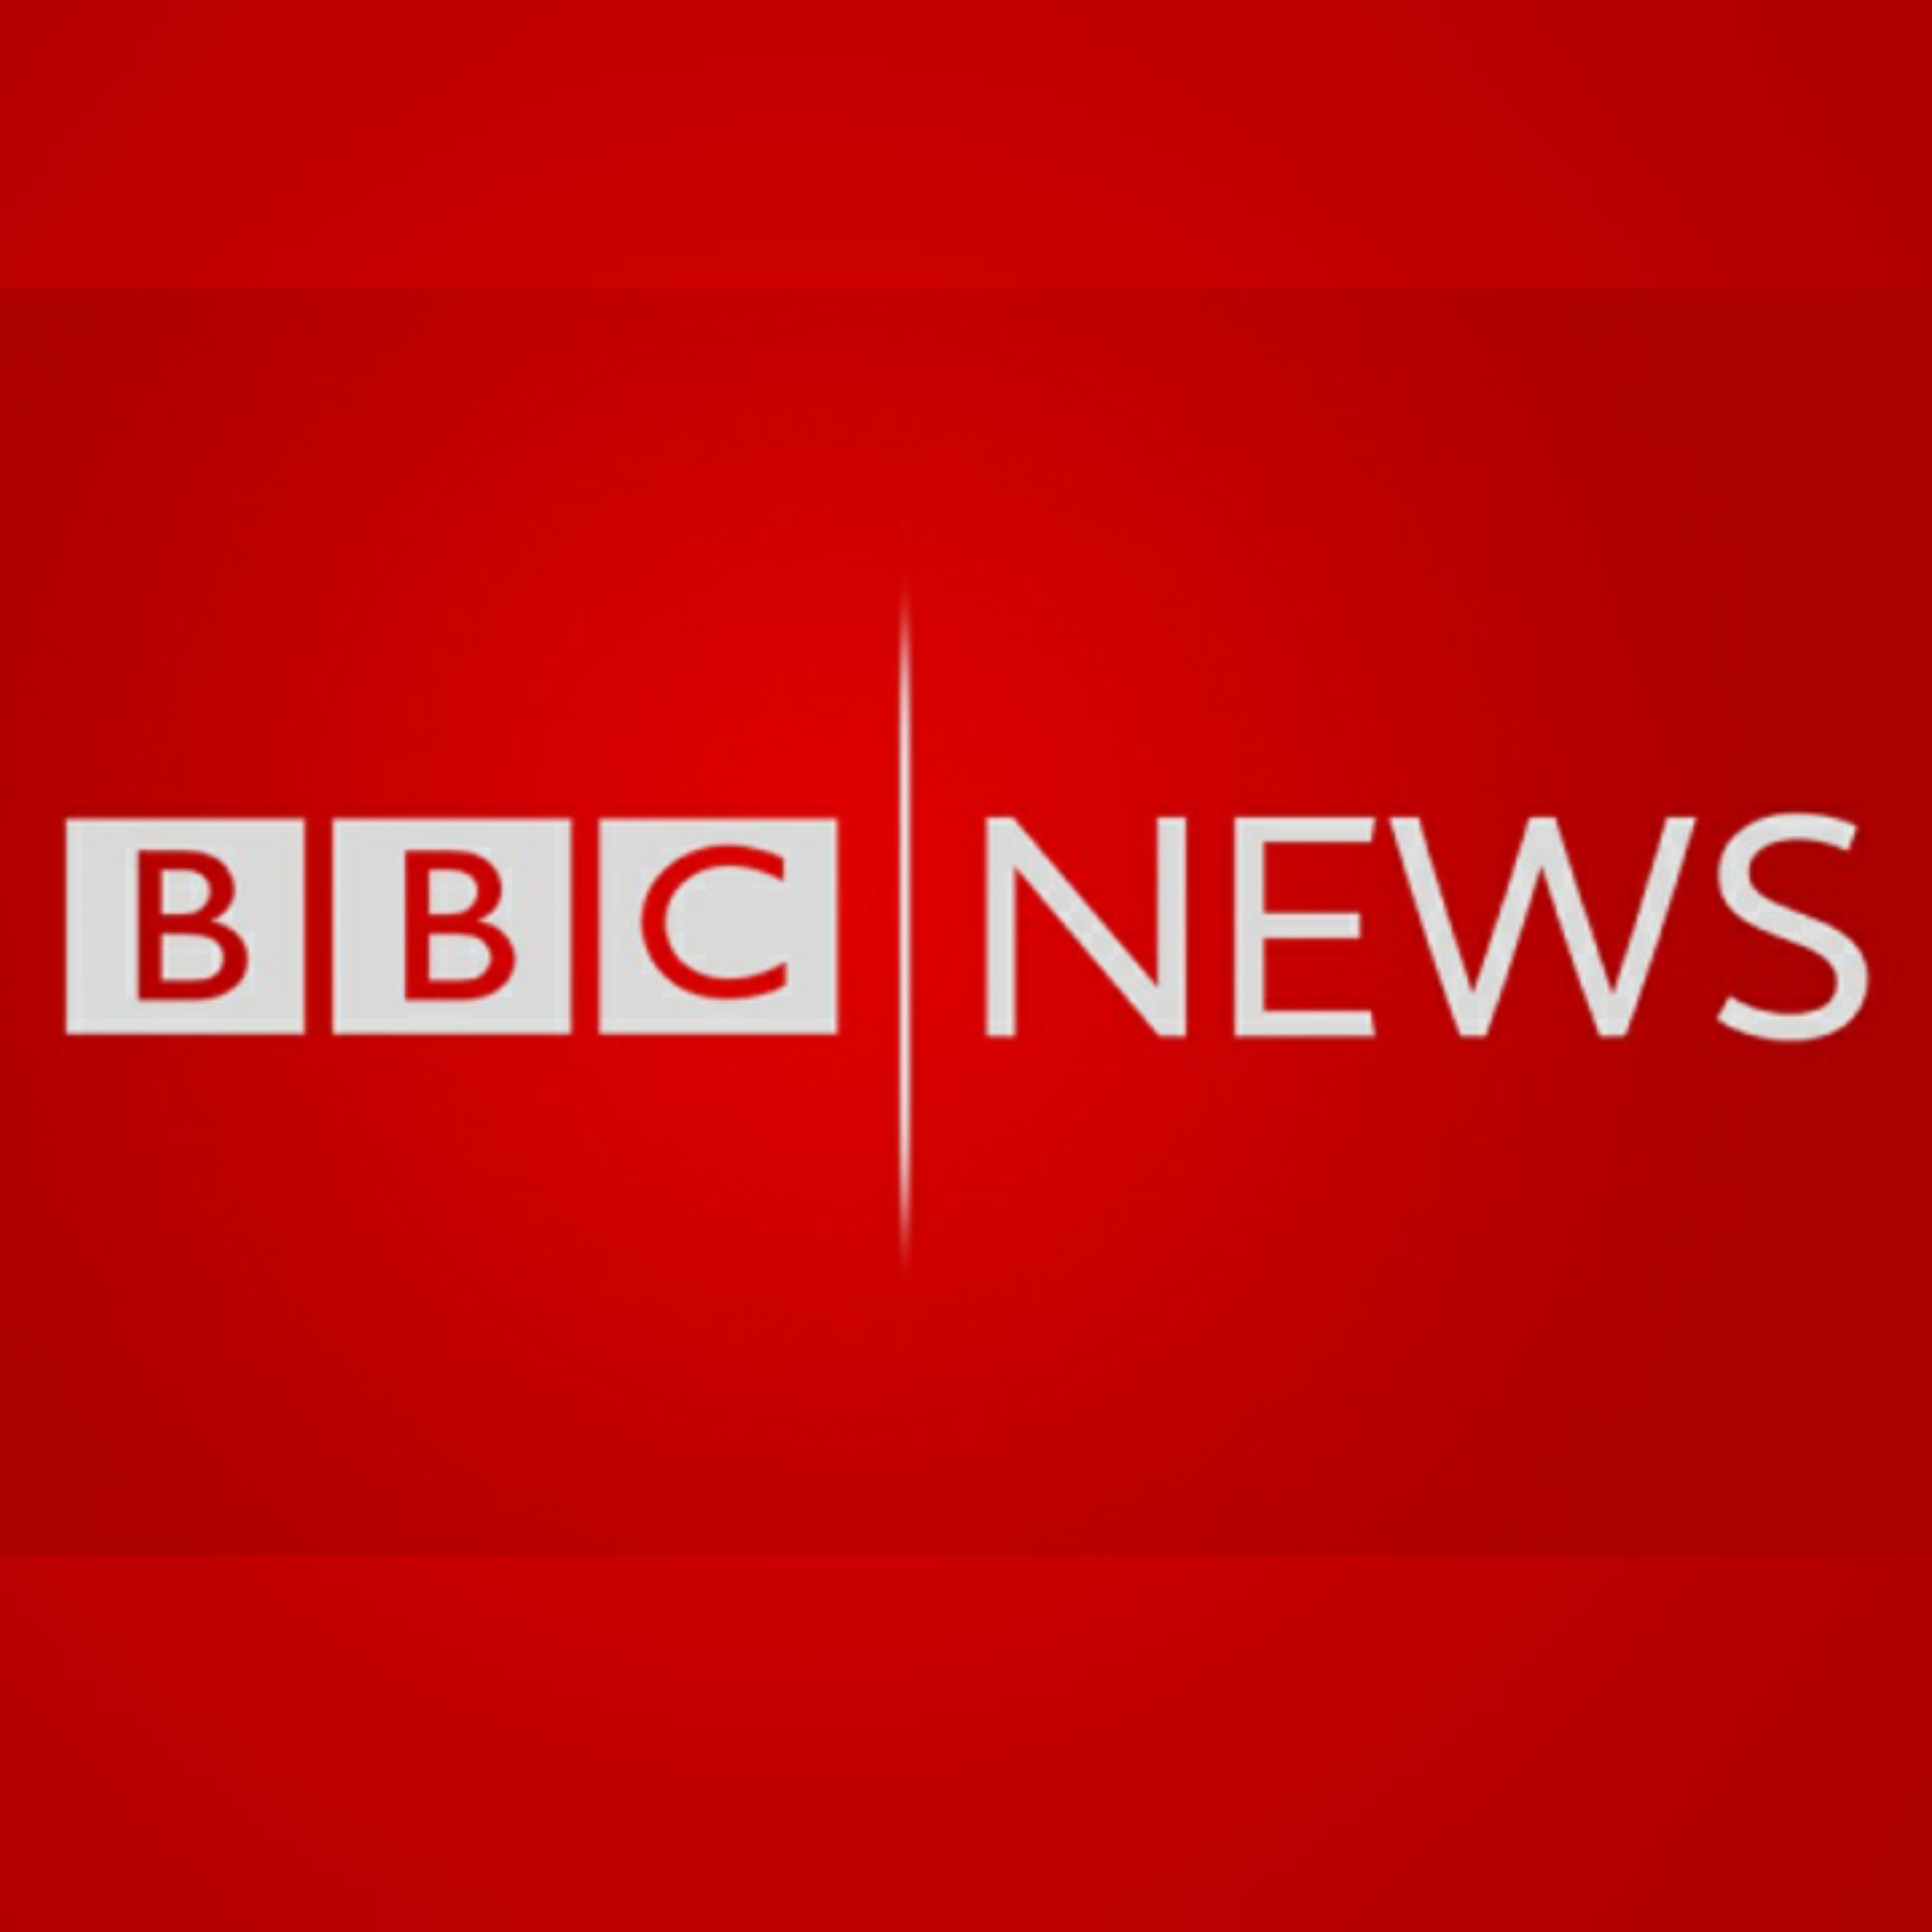 Bbc news telegram. Bbc News логотип. Bbc News (Телеканал). Логотип телеканала bbc World News. Лого Телеканал bbc News.